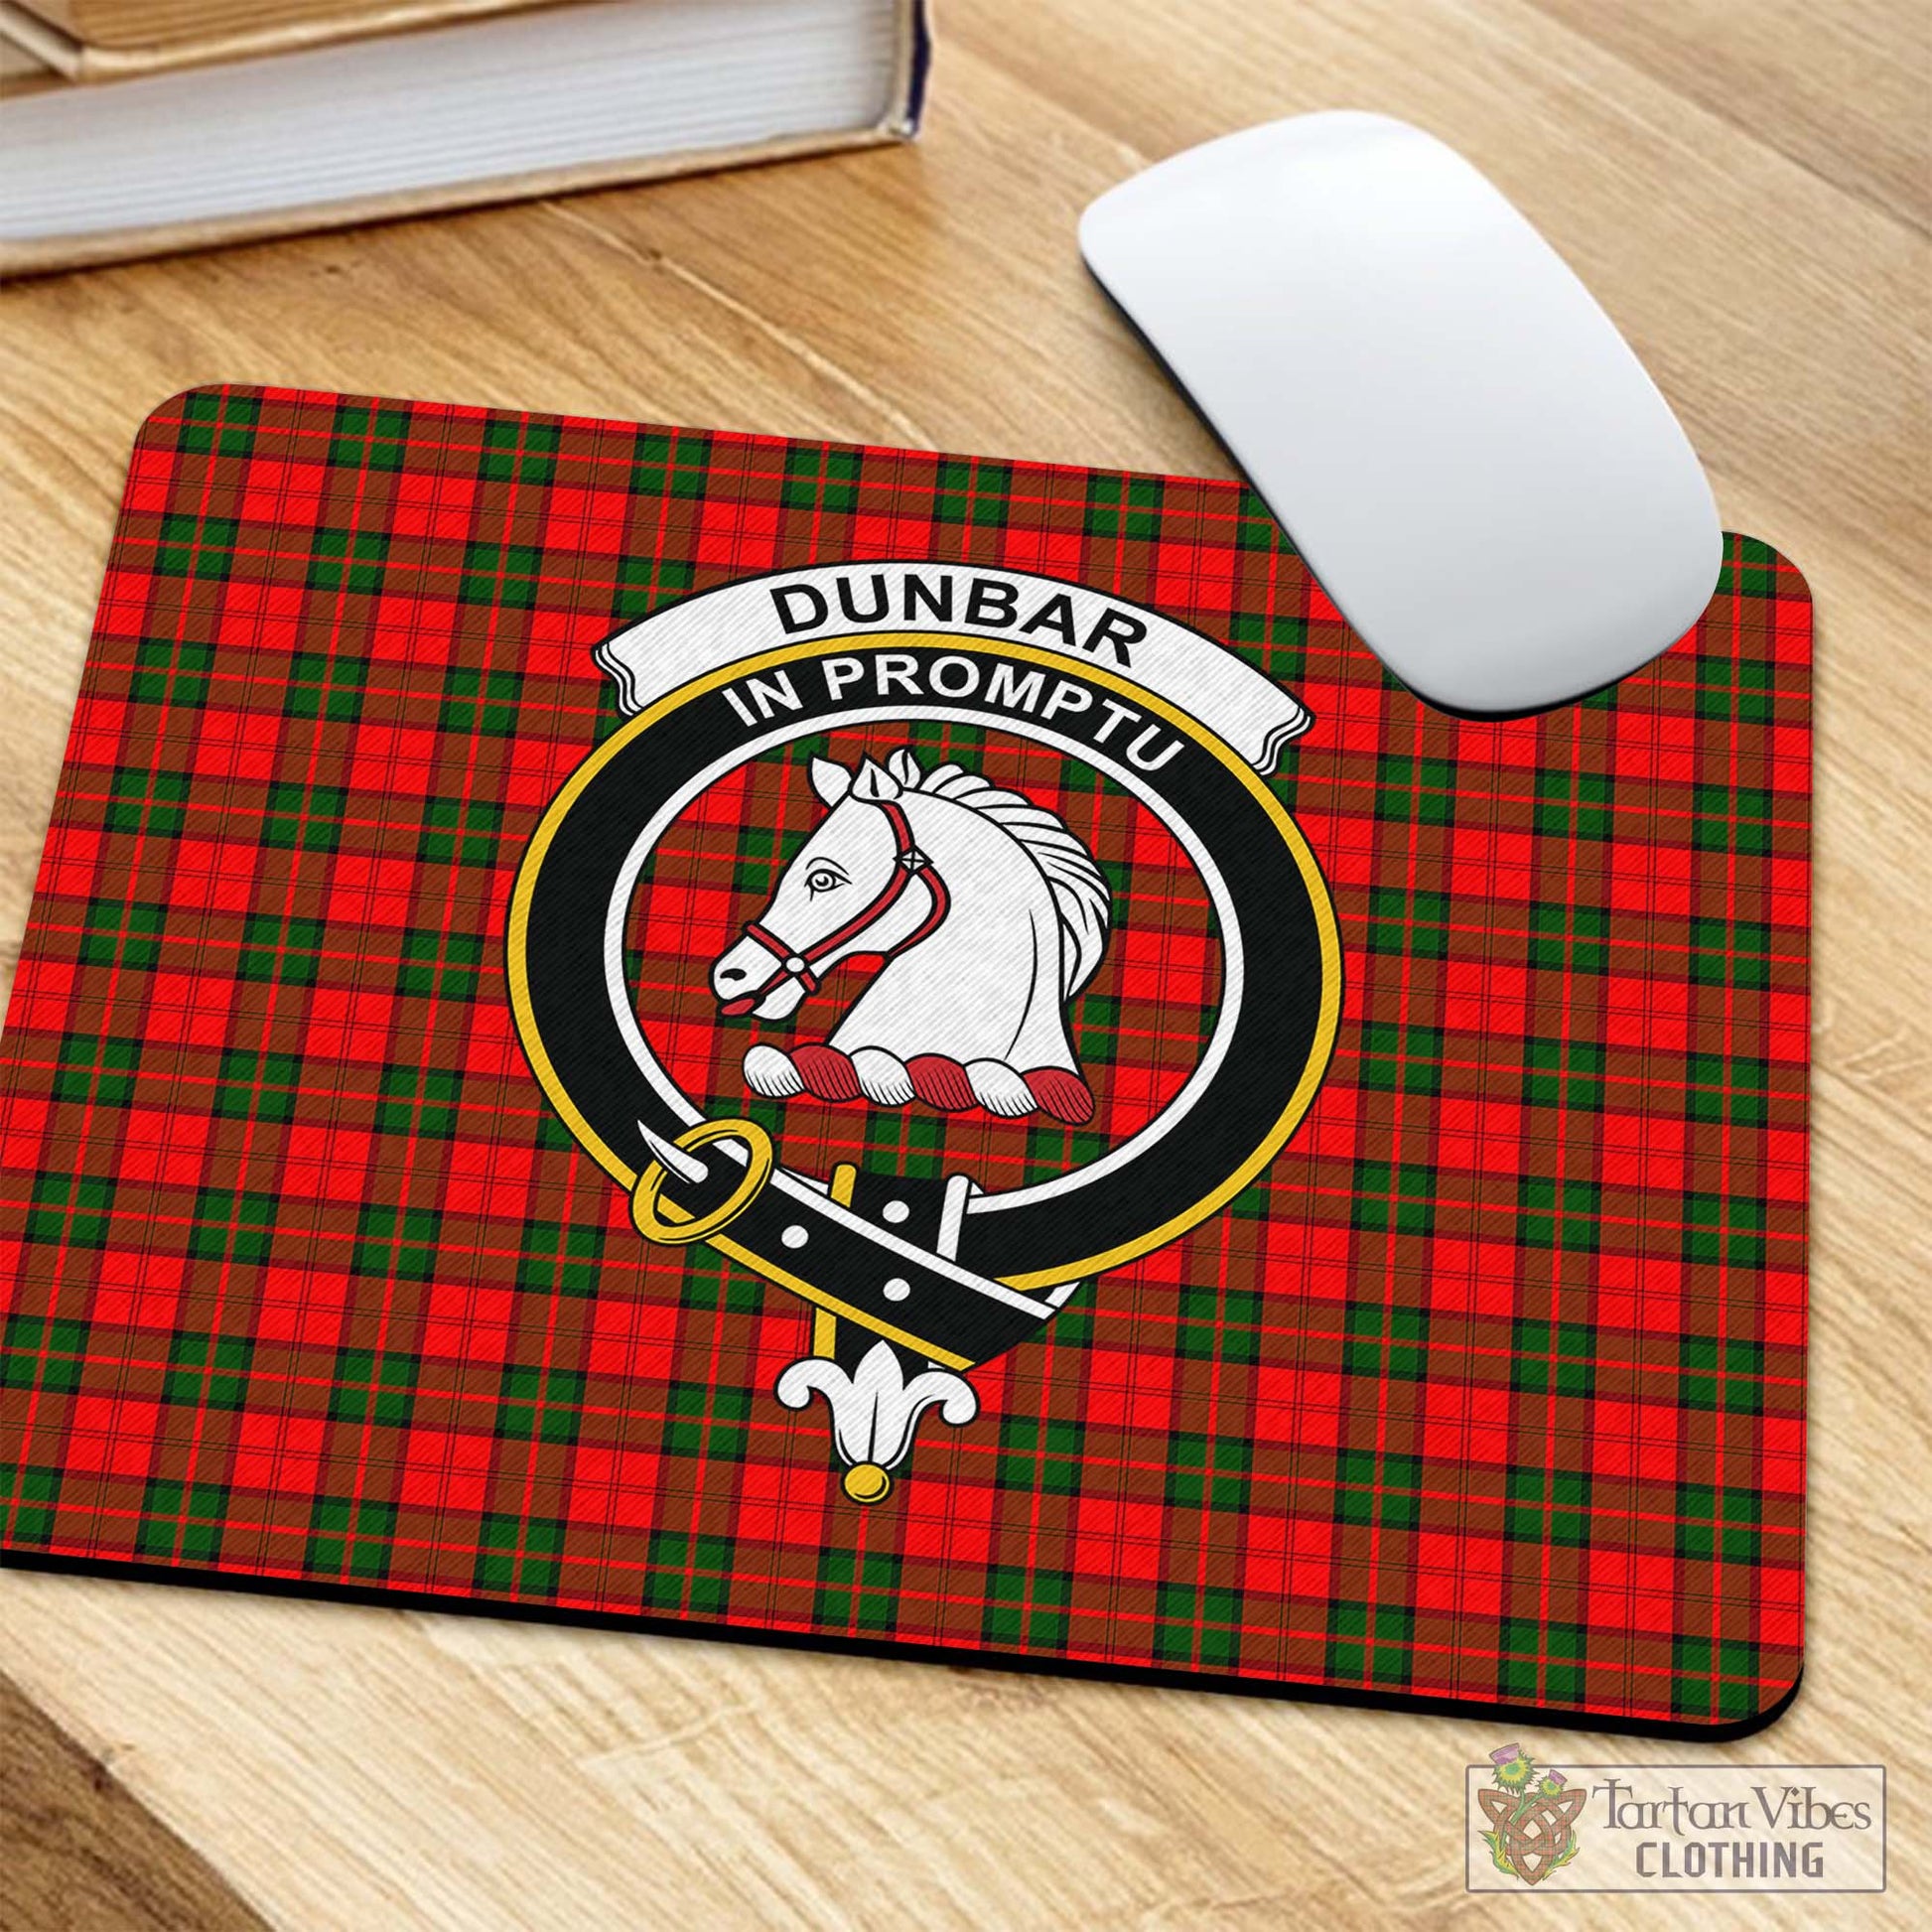 Tartan Vibes Clothing Dunbar Modern Tartan Mouse Pad with Family Crest